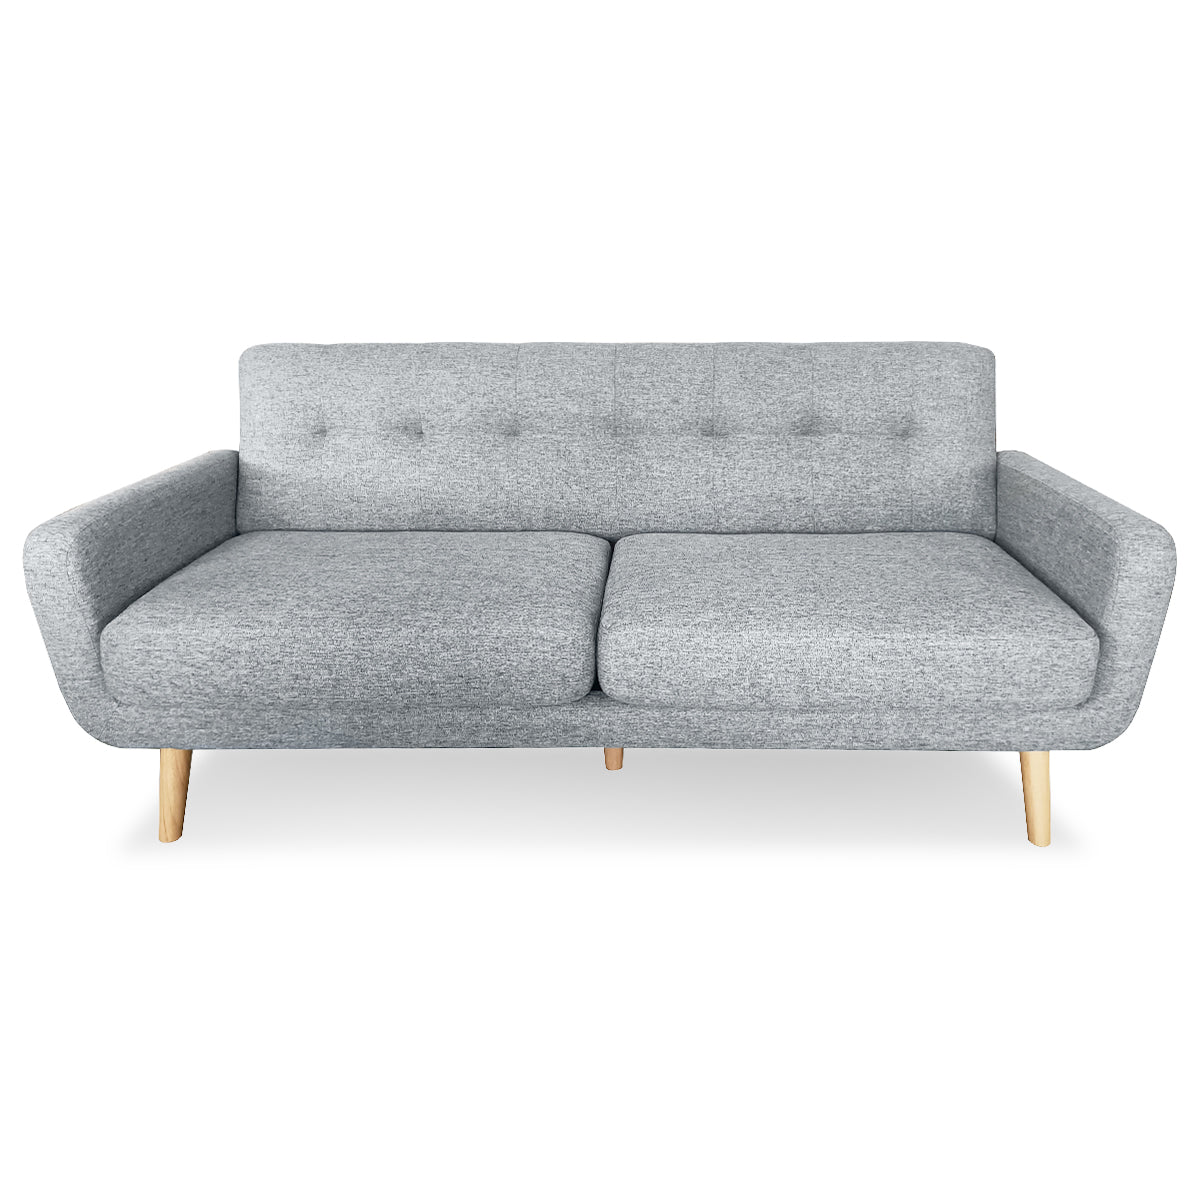 Sarantino 6-Seater Linen Sofa Set Couch Futon - Light Grey - 0